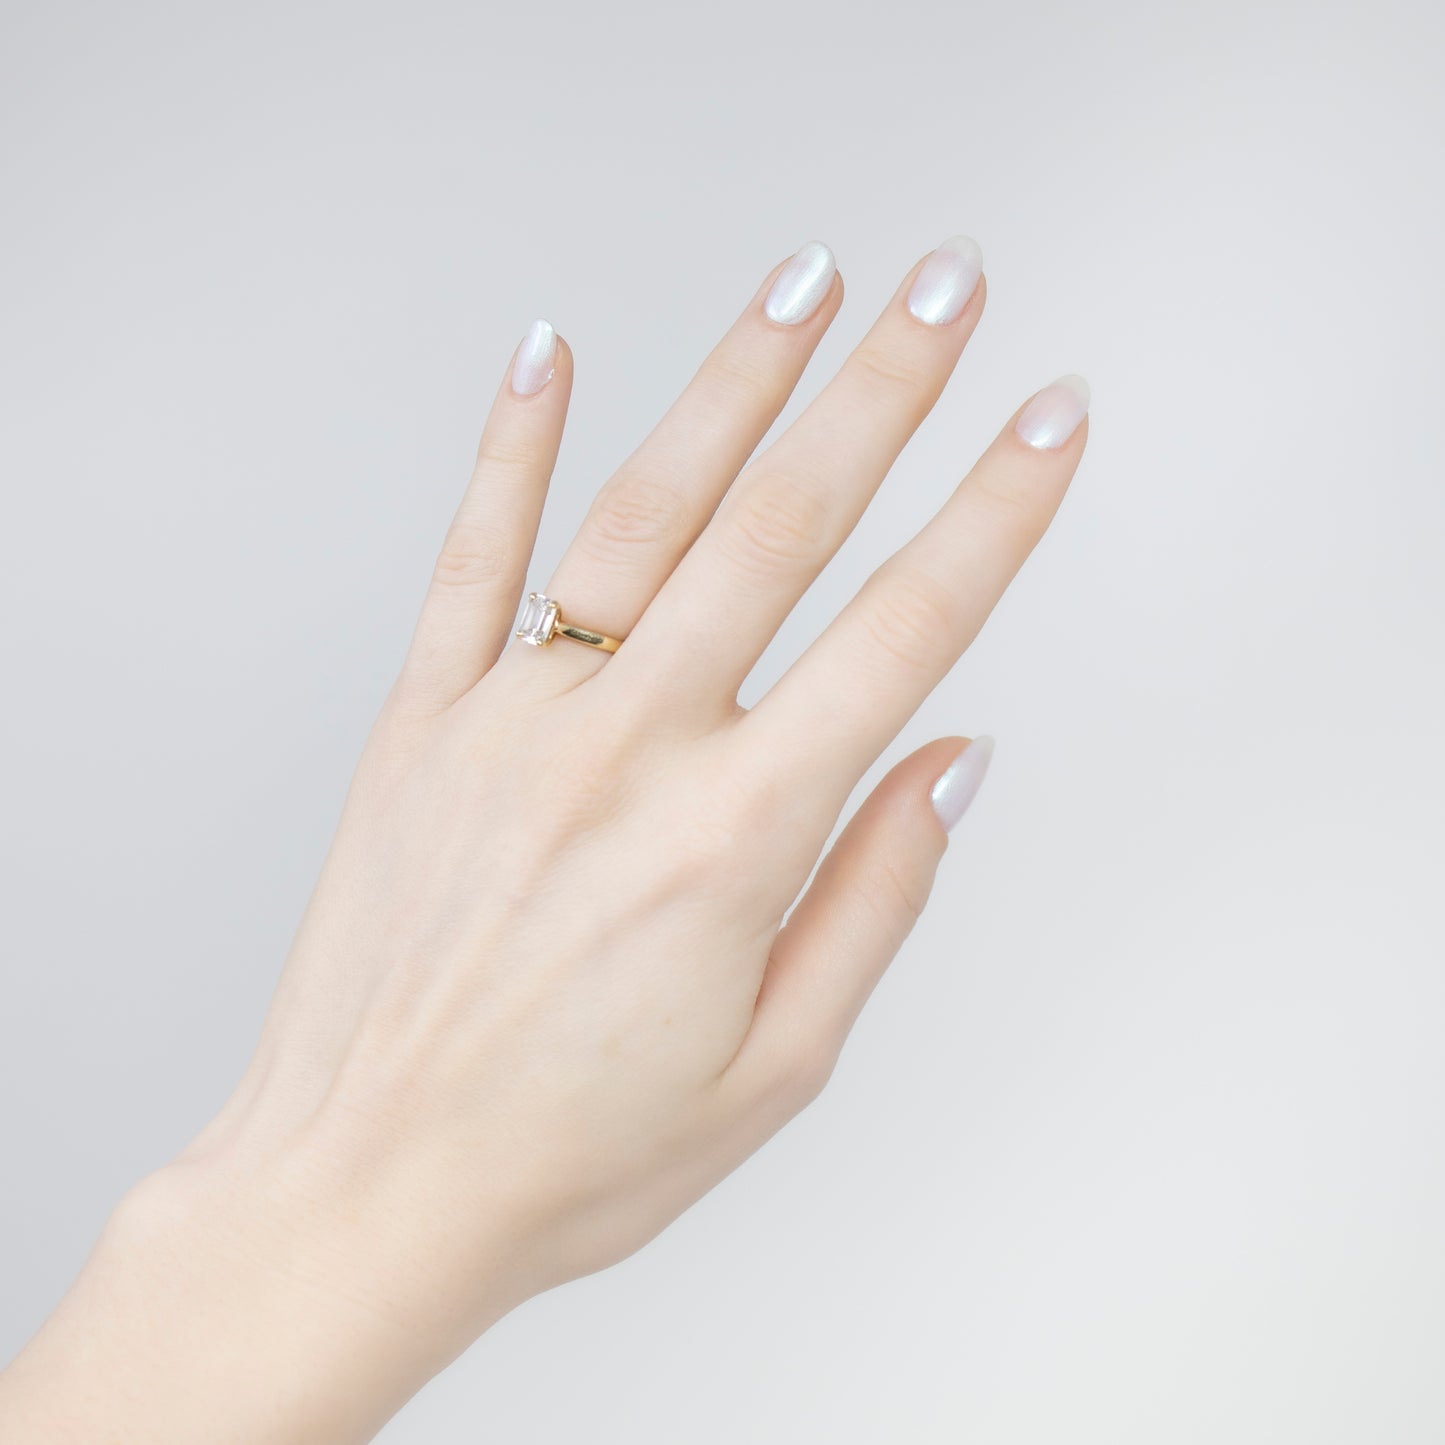 White pearl nail polish swatch on pale skin tone